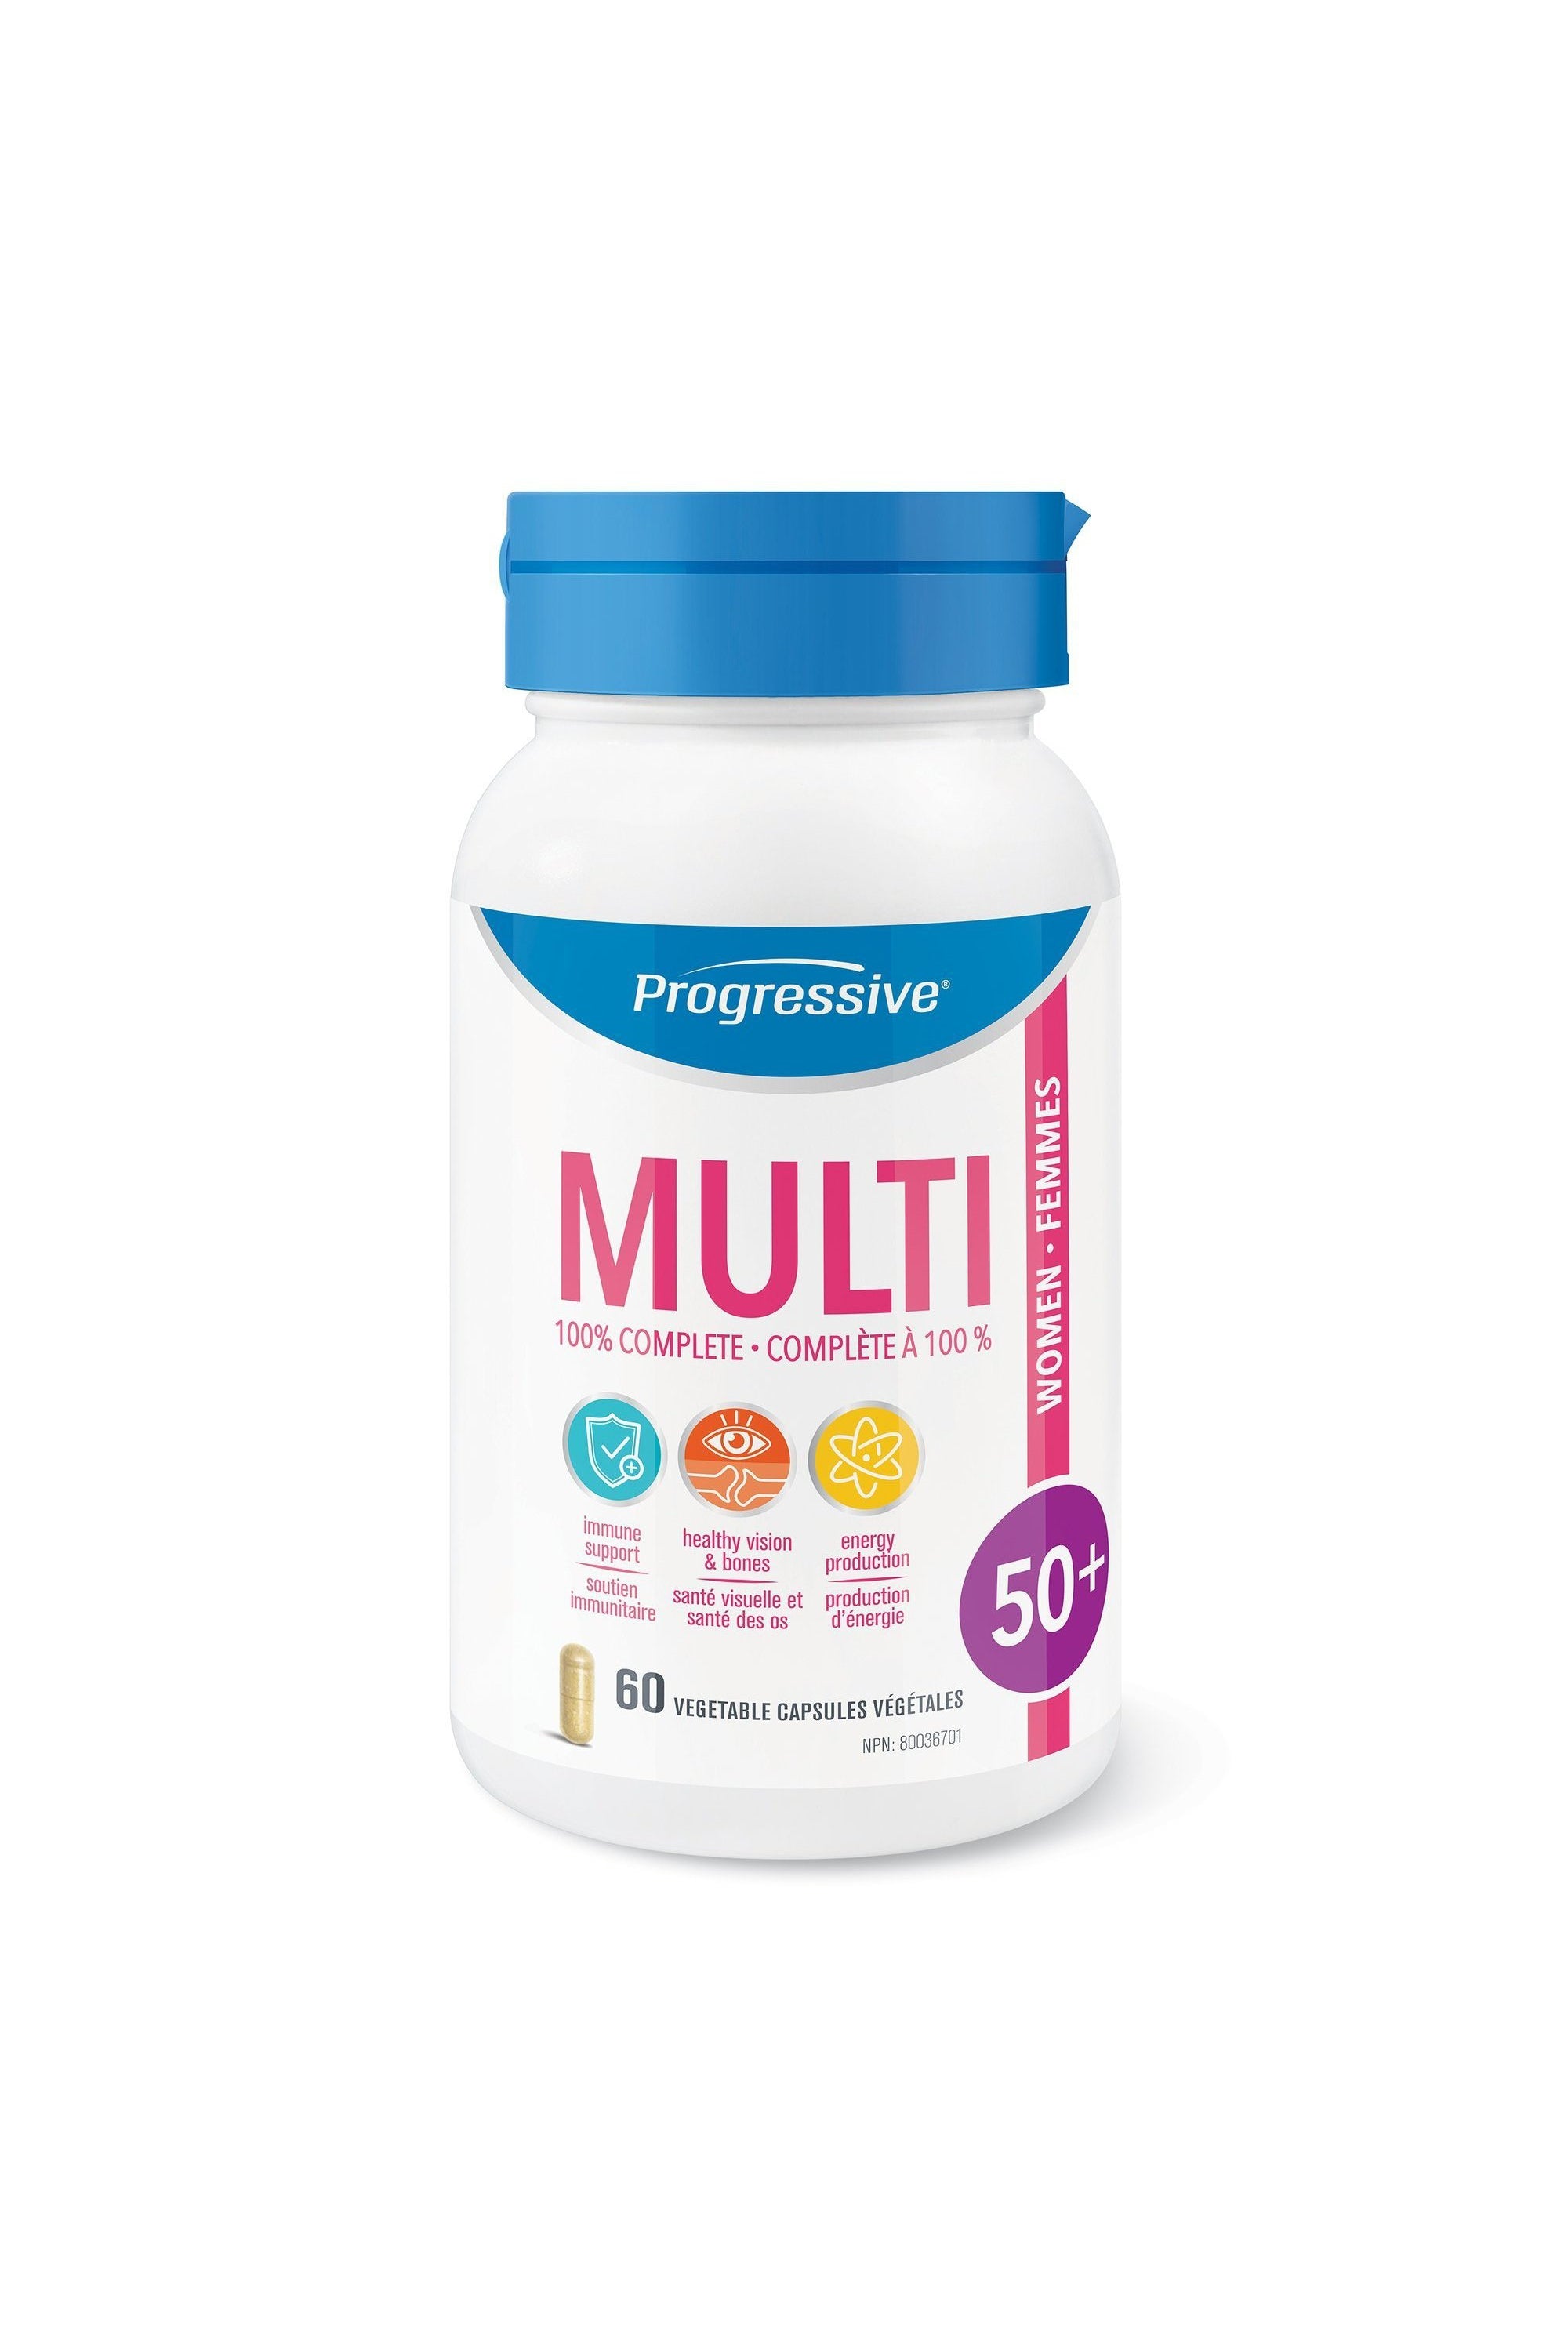 Progressive Multi for Adult Women 50+ 60s